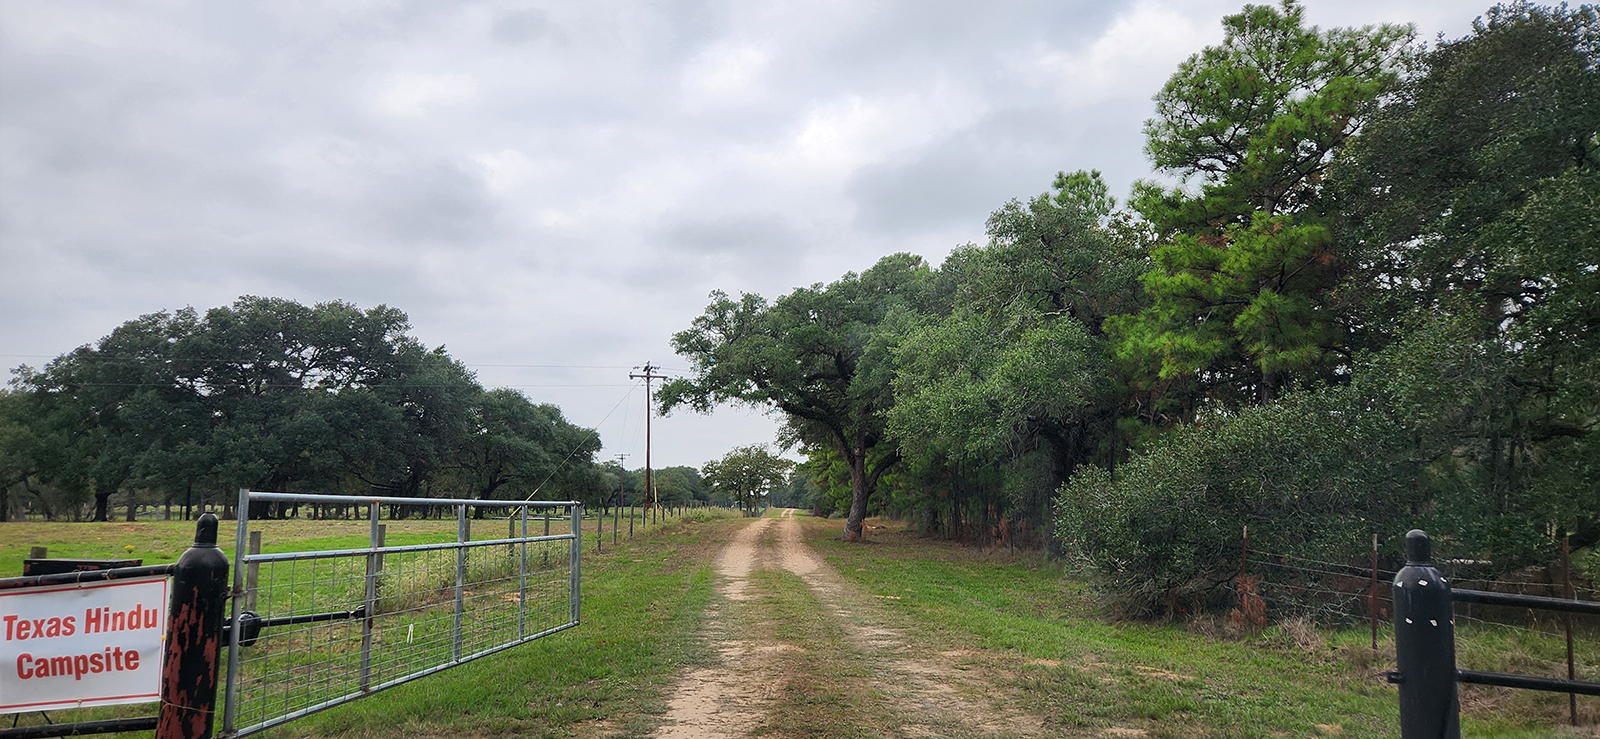 Part of the Texas Hindu Campsite property near Houston. (Courtesy photo)